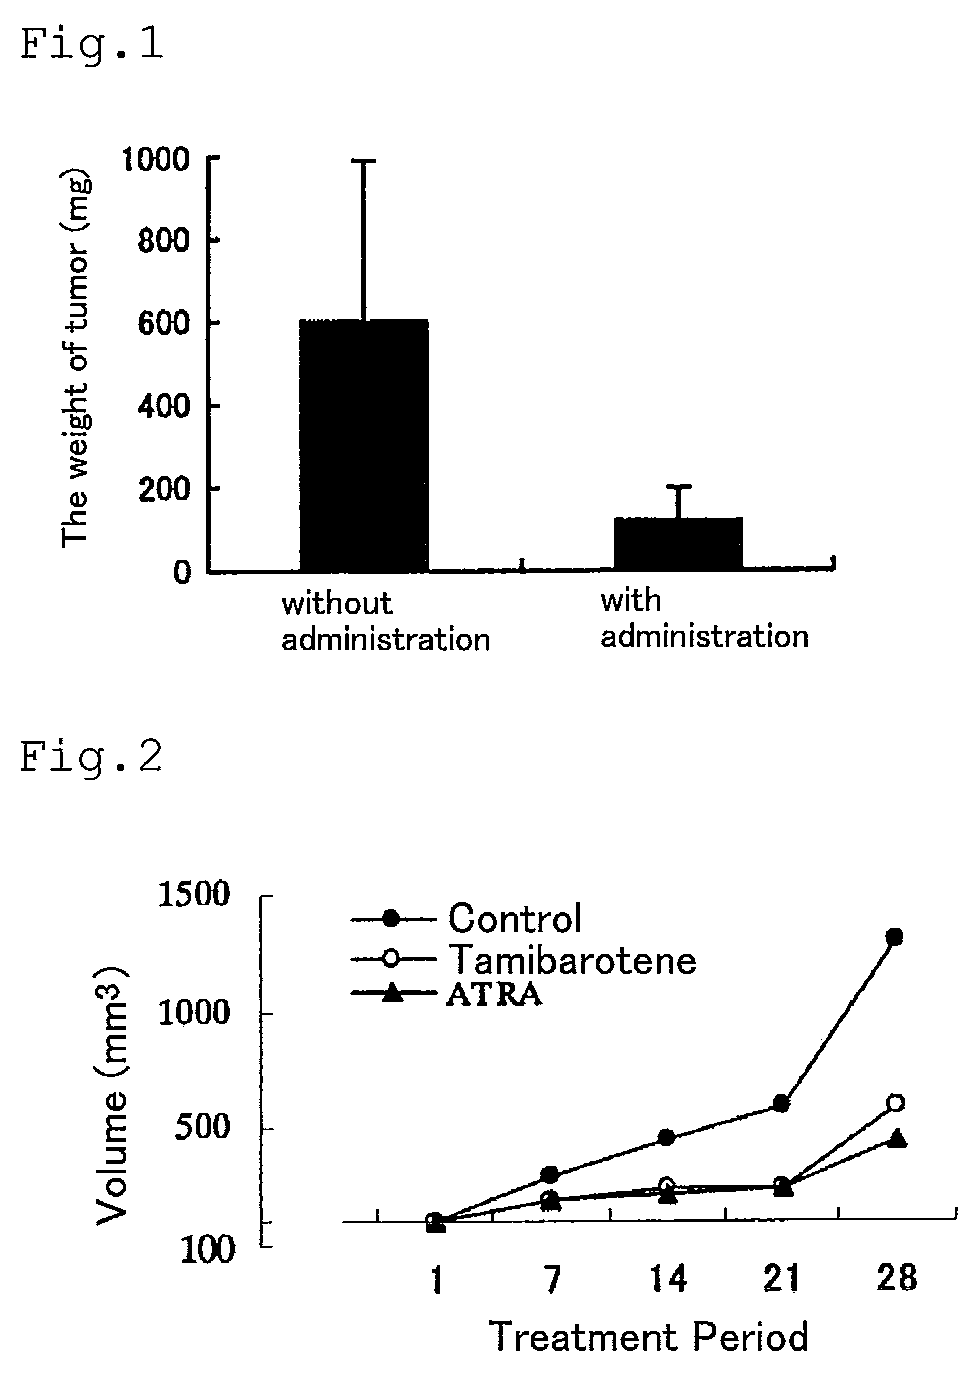 Tamibarotene capsule preparation